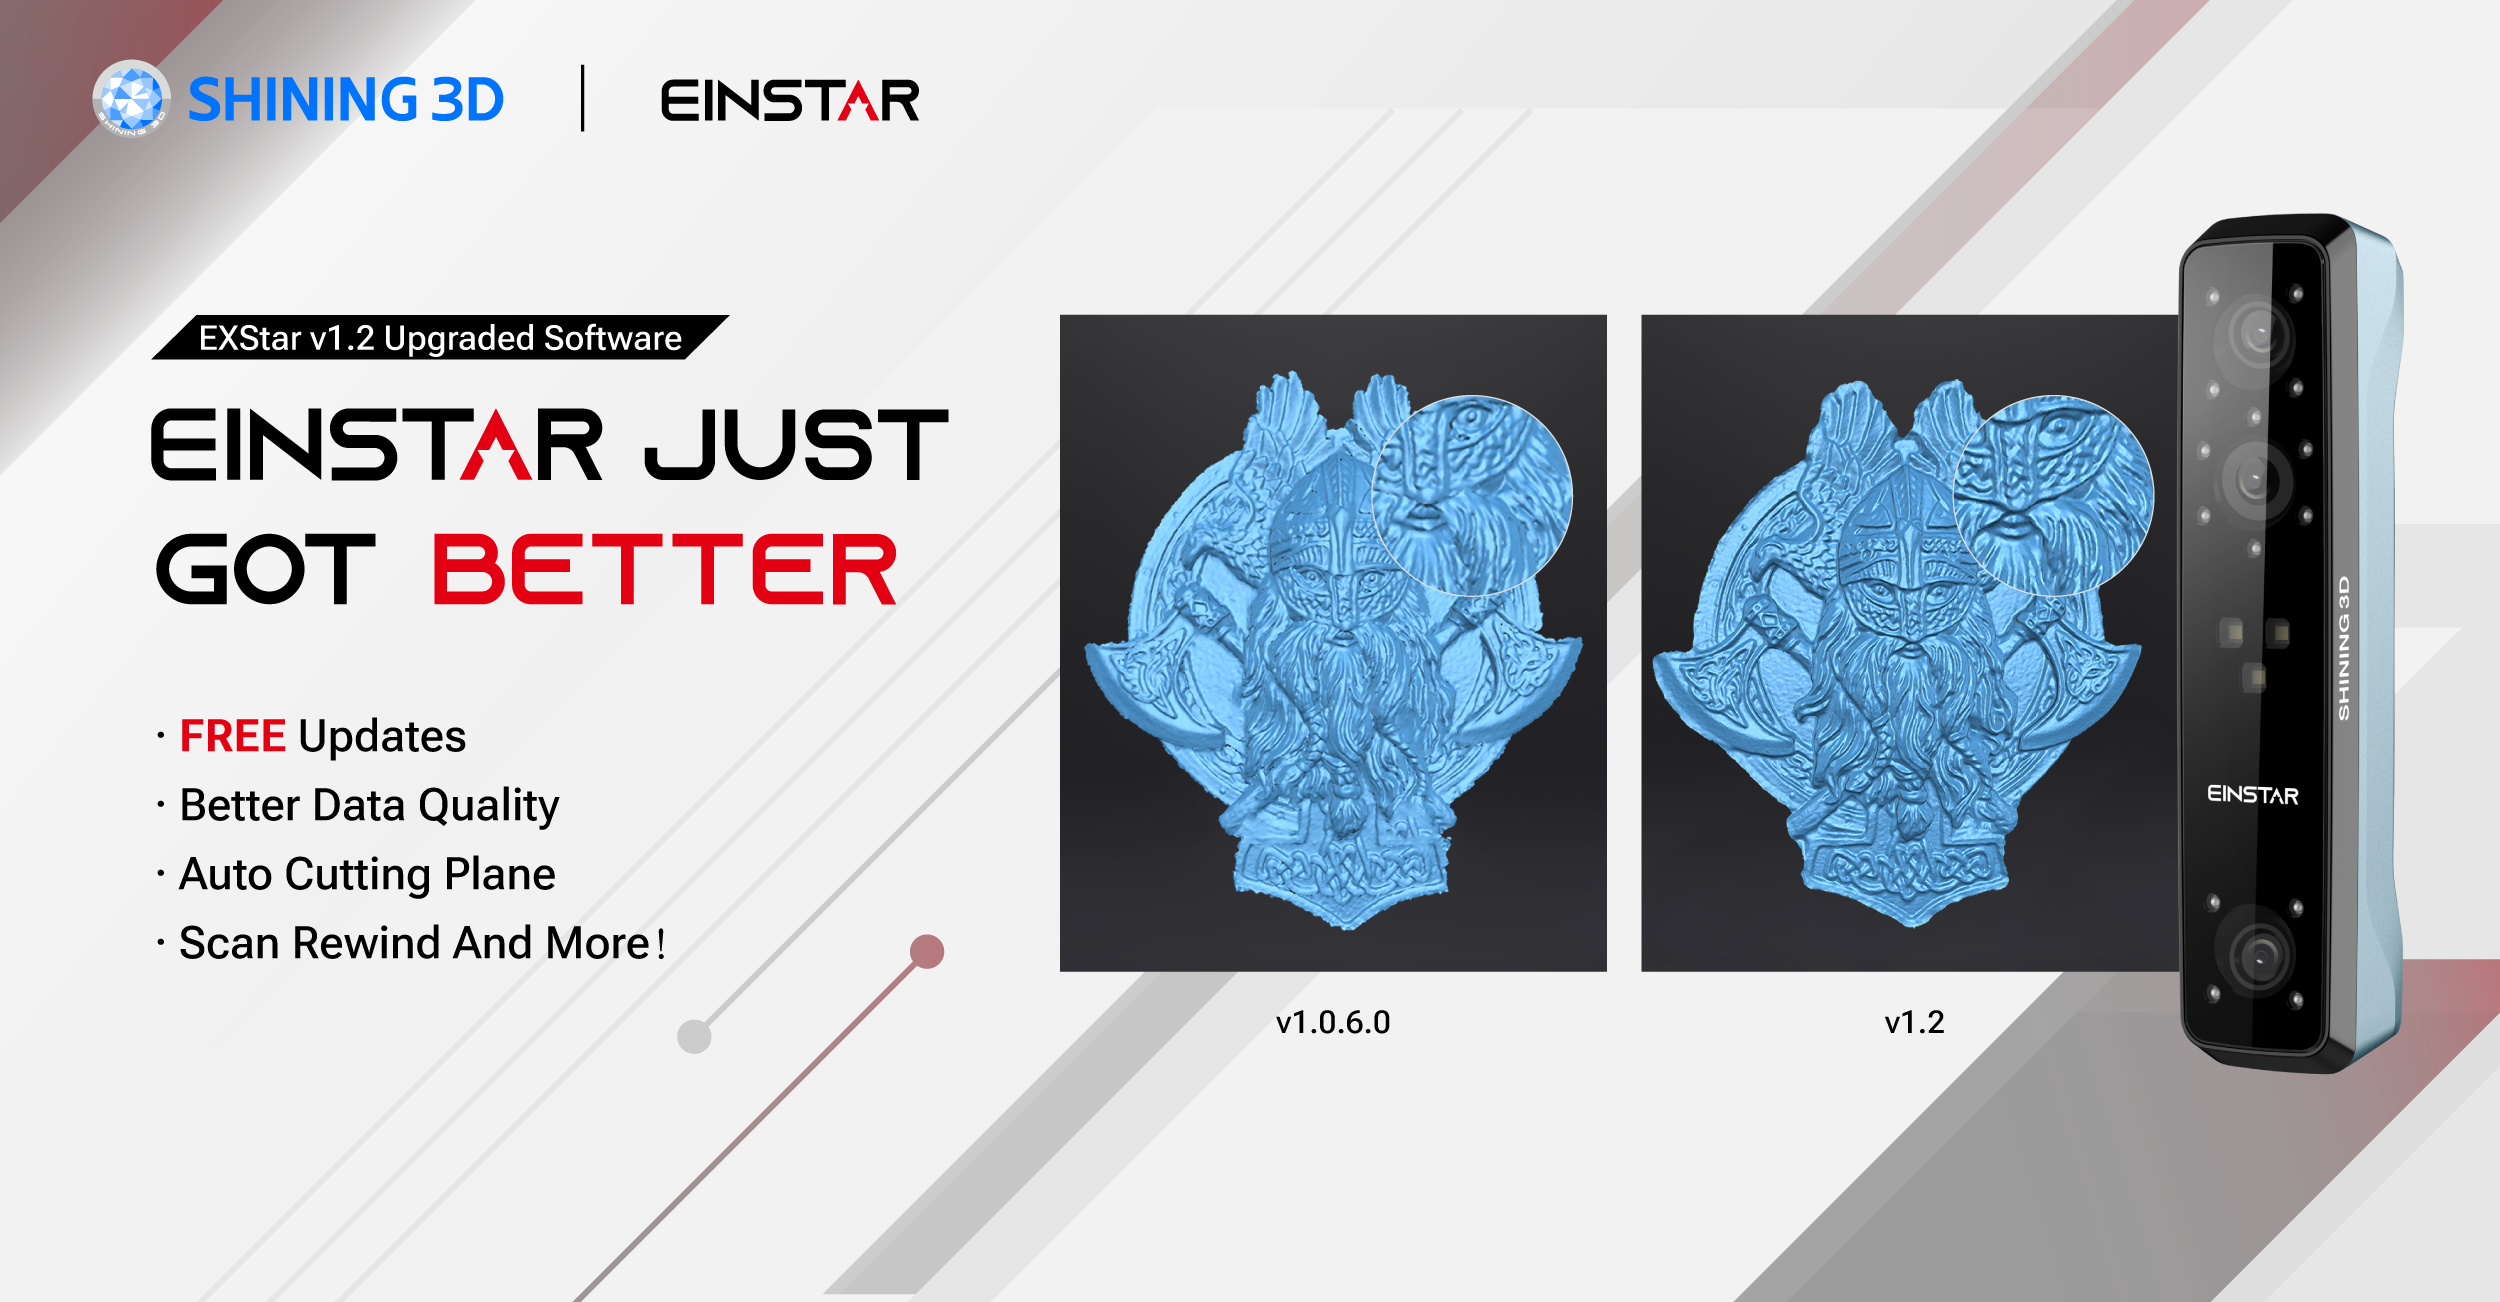 Einstar Updates EXStar v1.2 Software: Elevating 3D Scanning to New Heights